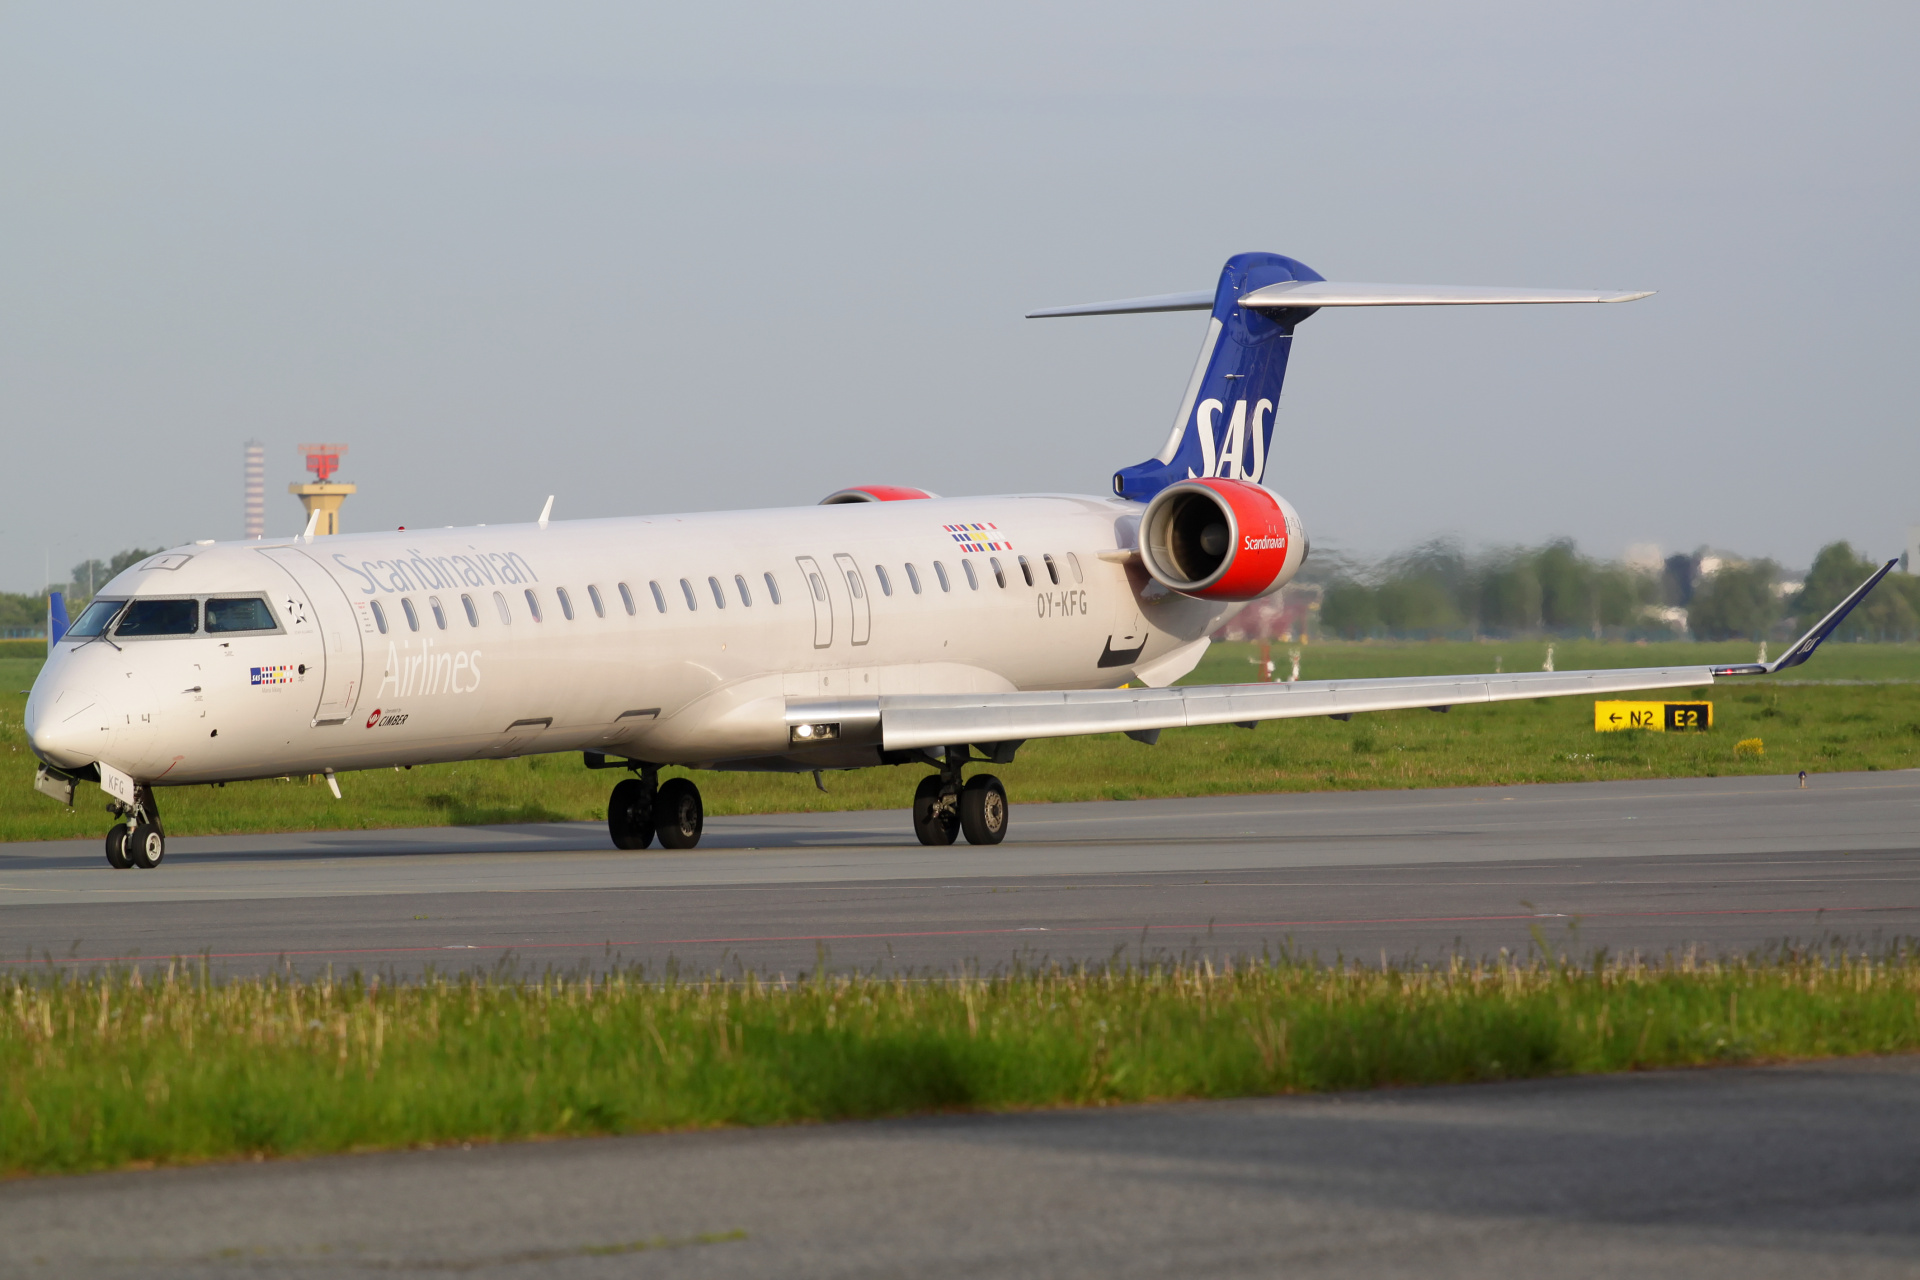 OY-KFG (Cimber Air) (Aircraft » EPWA Spotting » Mitsubishi Regional Jet » CRJ-900 » SAS Scandinavian Airlines)